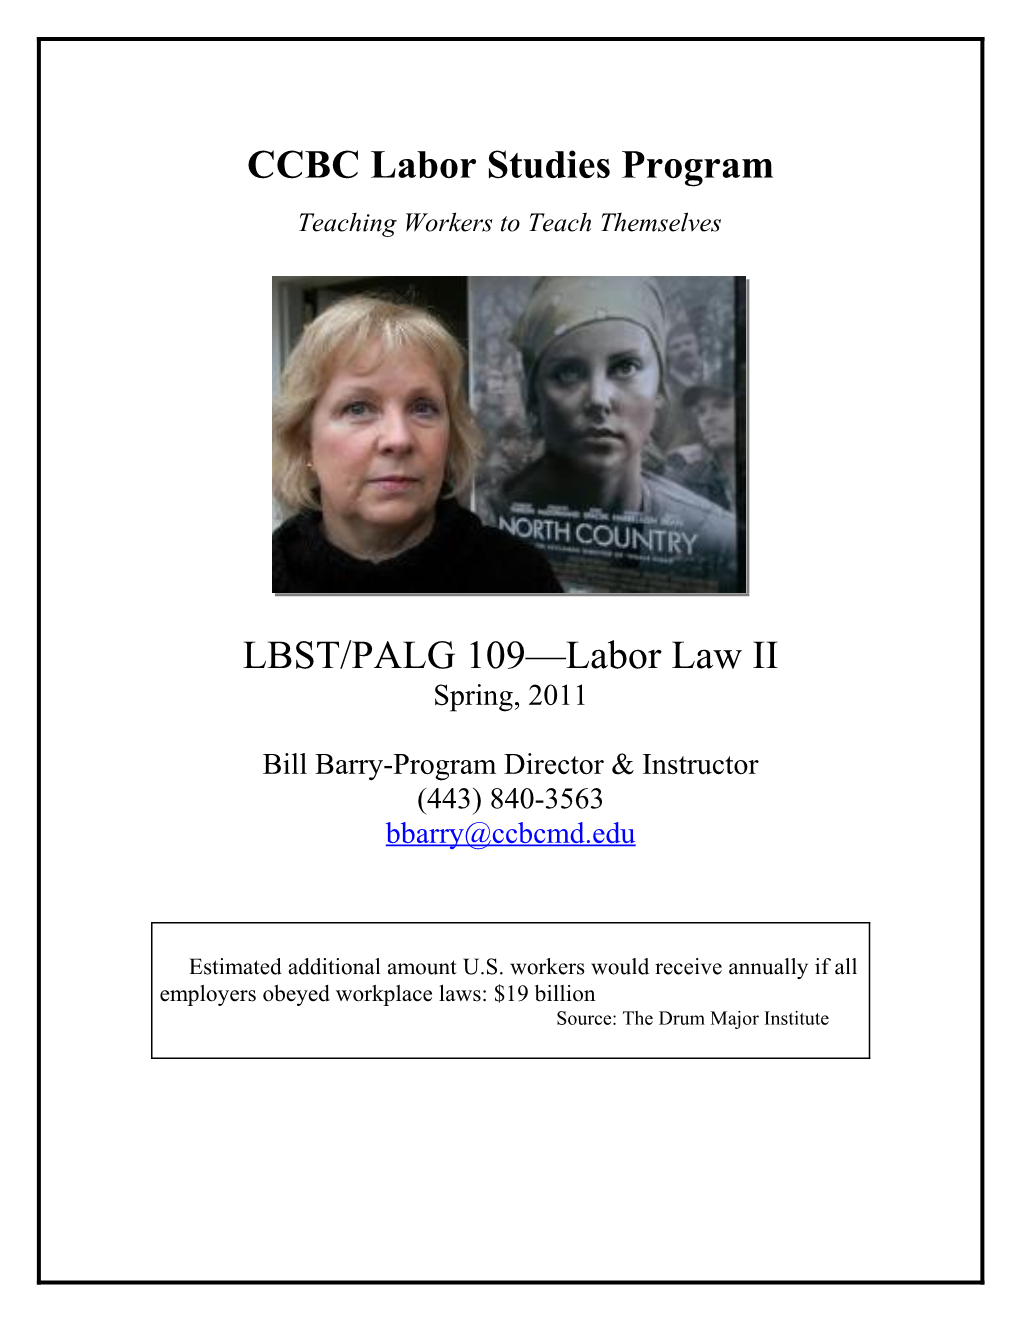 CCBC Labor Studies Program s1